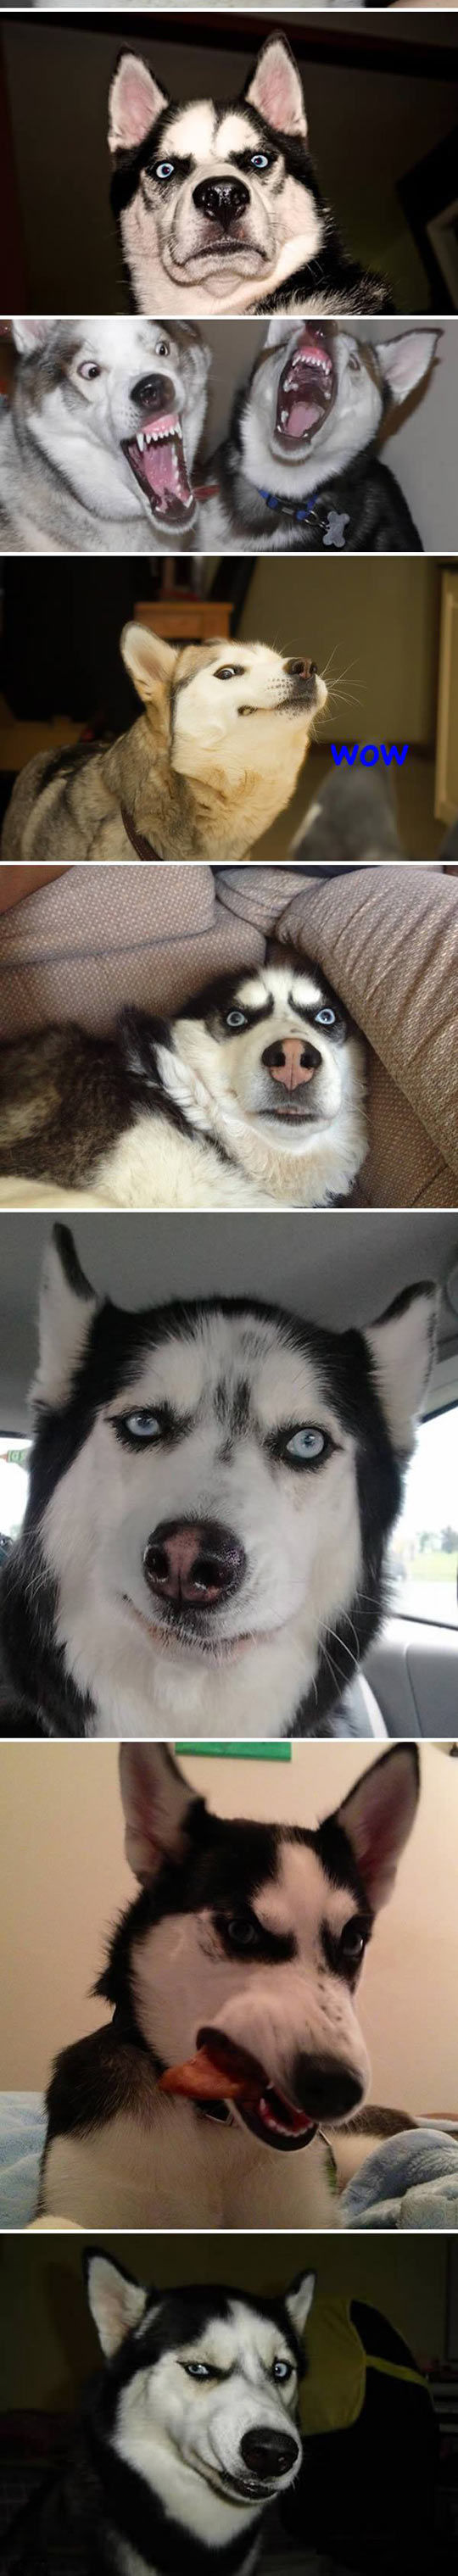 3-funny-husky-dog-siberian-faces-tongue